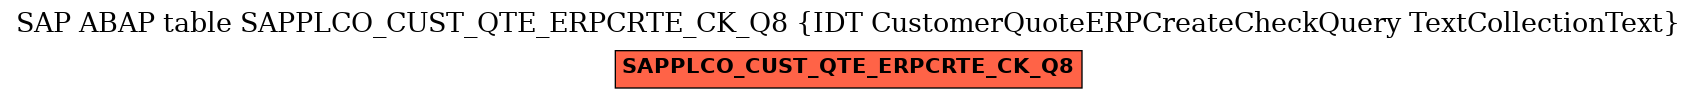 E-R Diagram for table SAPPLCO_CUST_QTE_ERPCRTE_CK_Q8 (IDT CustomerQuoteERPCreateCheckQuery TextCollectionText)